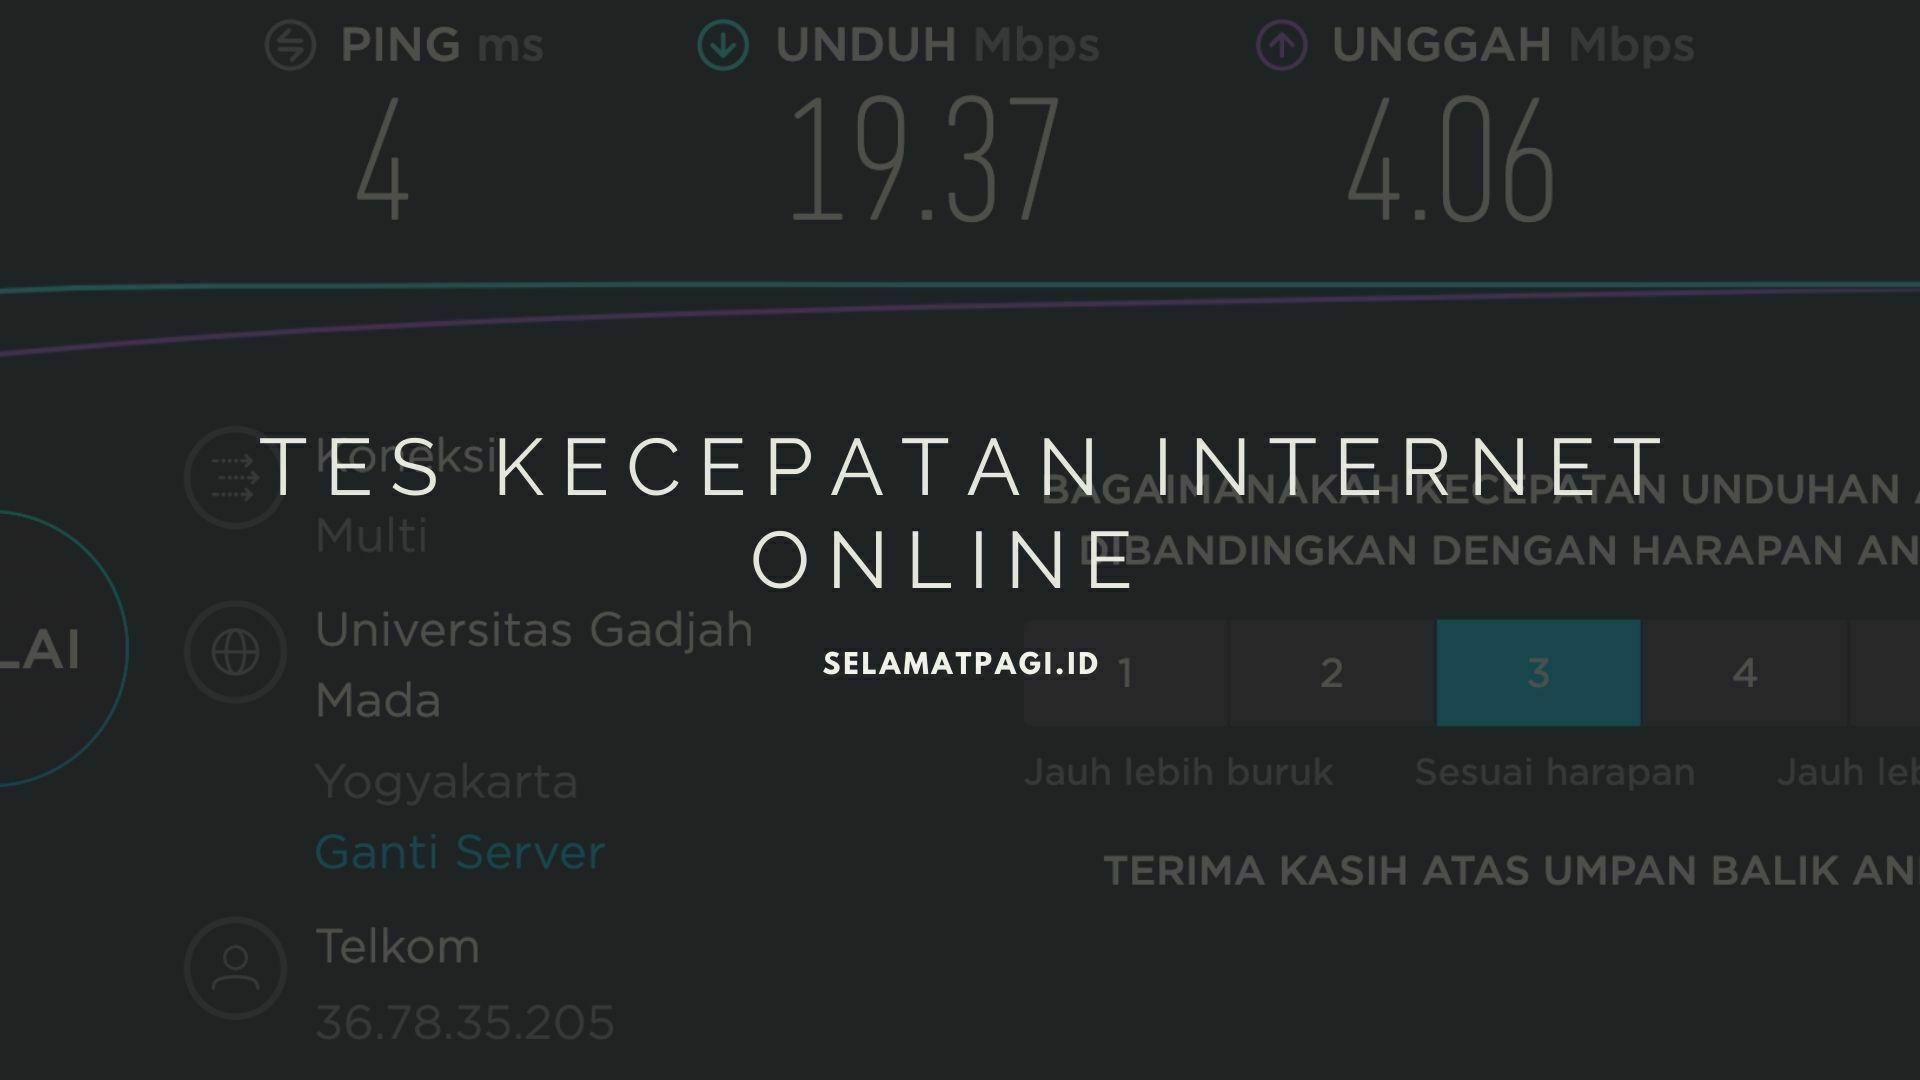 Tes kecepatan internet online